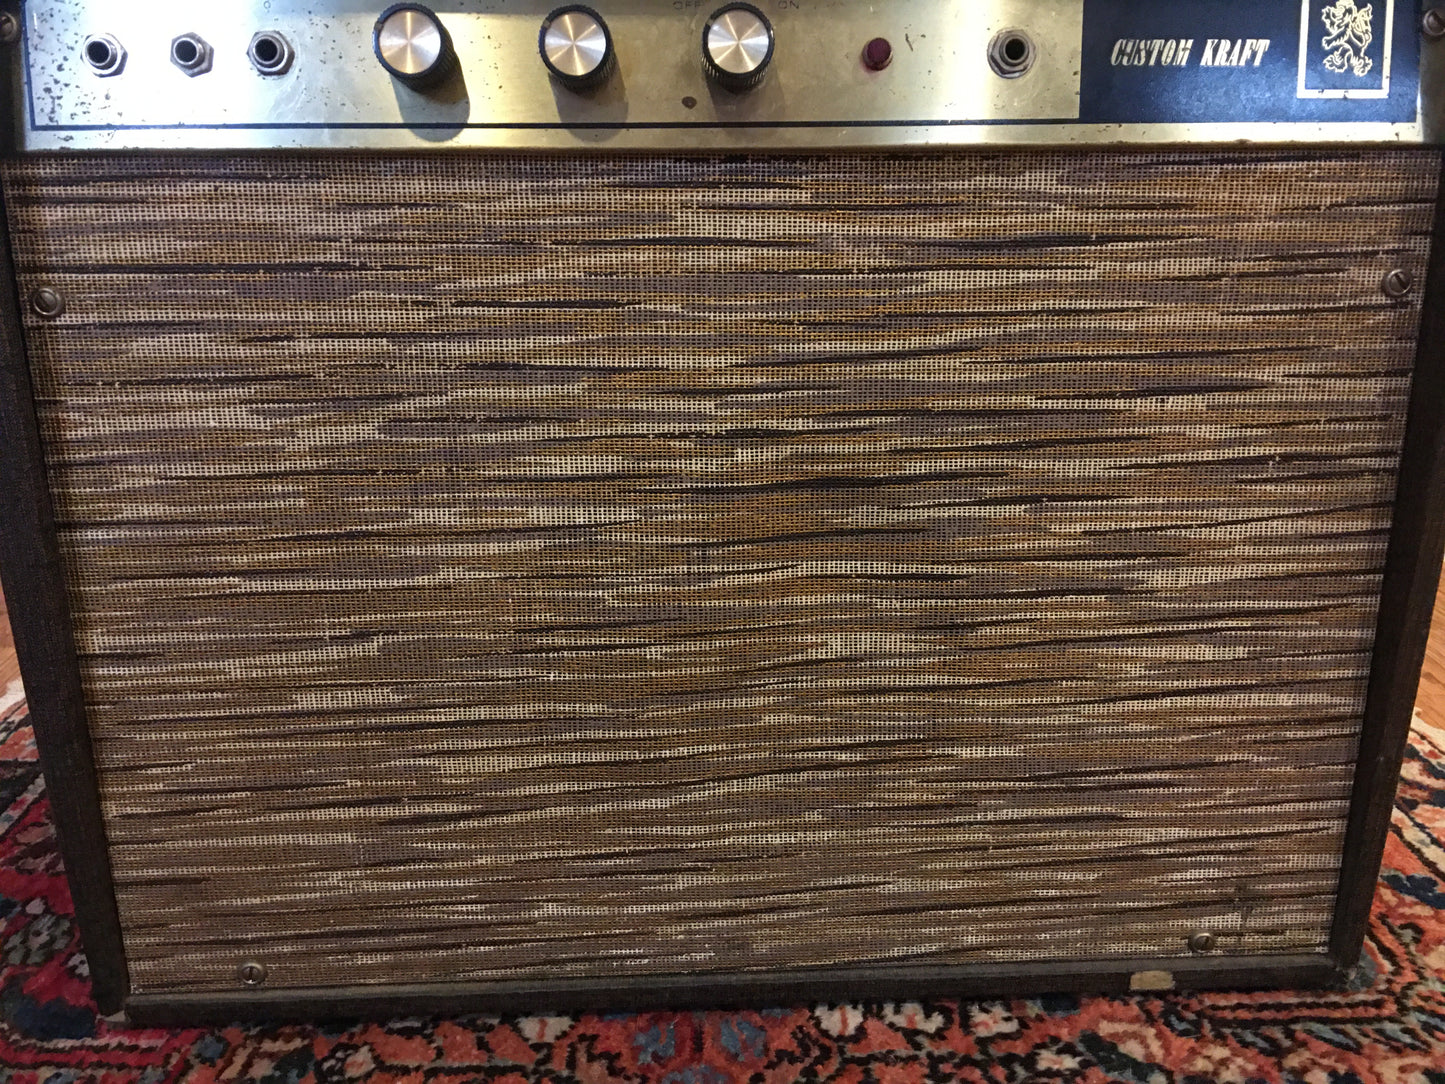 1963 Custom Kraft Model No. 500 Combo Amplifier